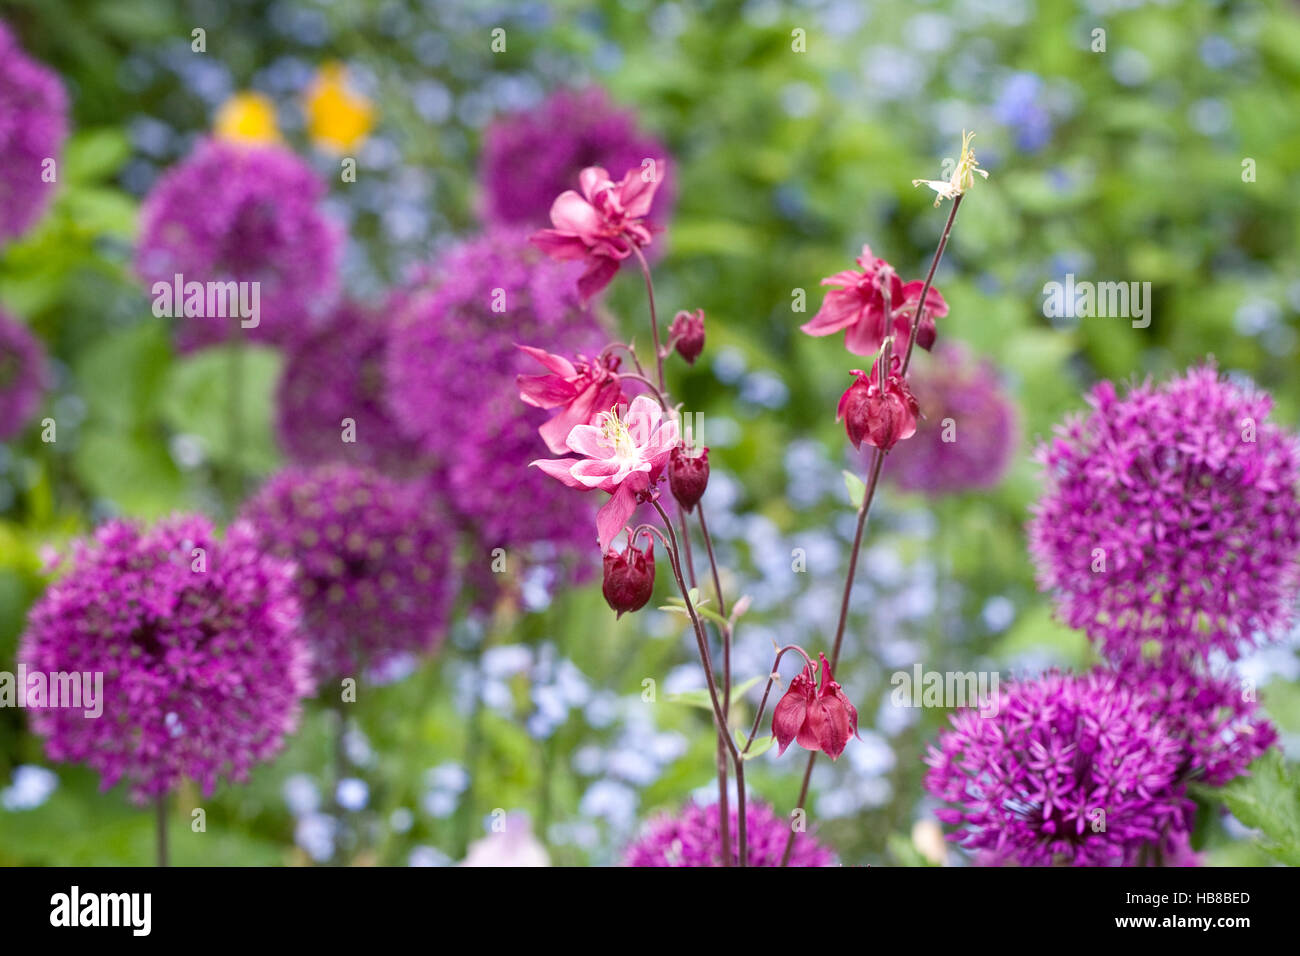 Pink Aquilegia amongst allium flowers in a cottage garden. Stock Photo